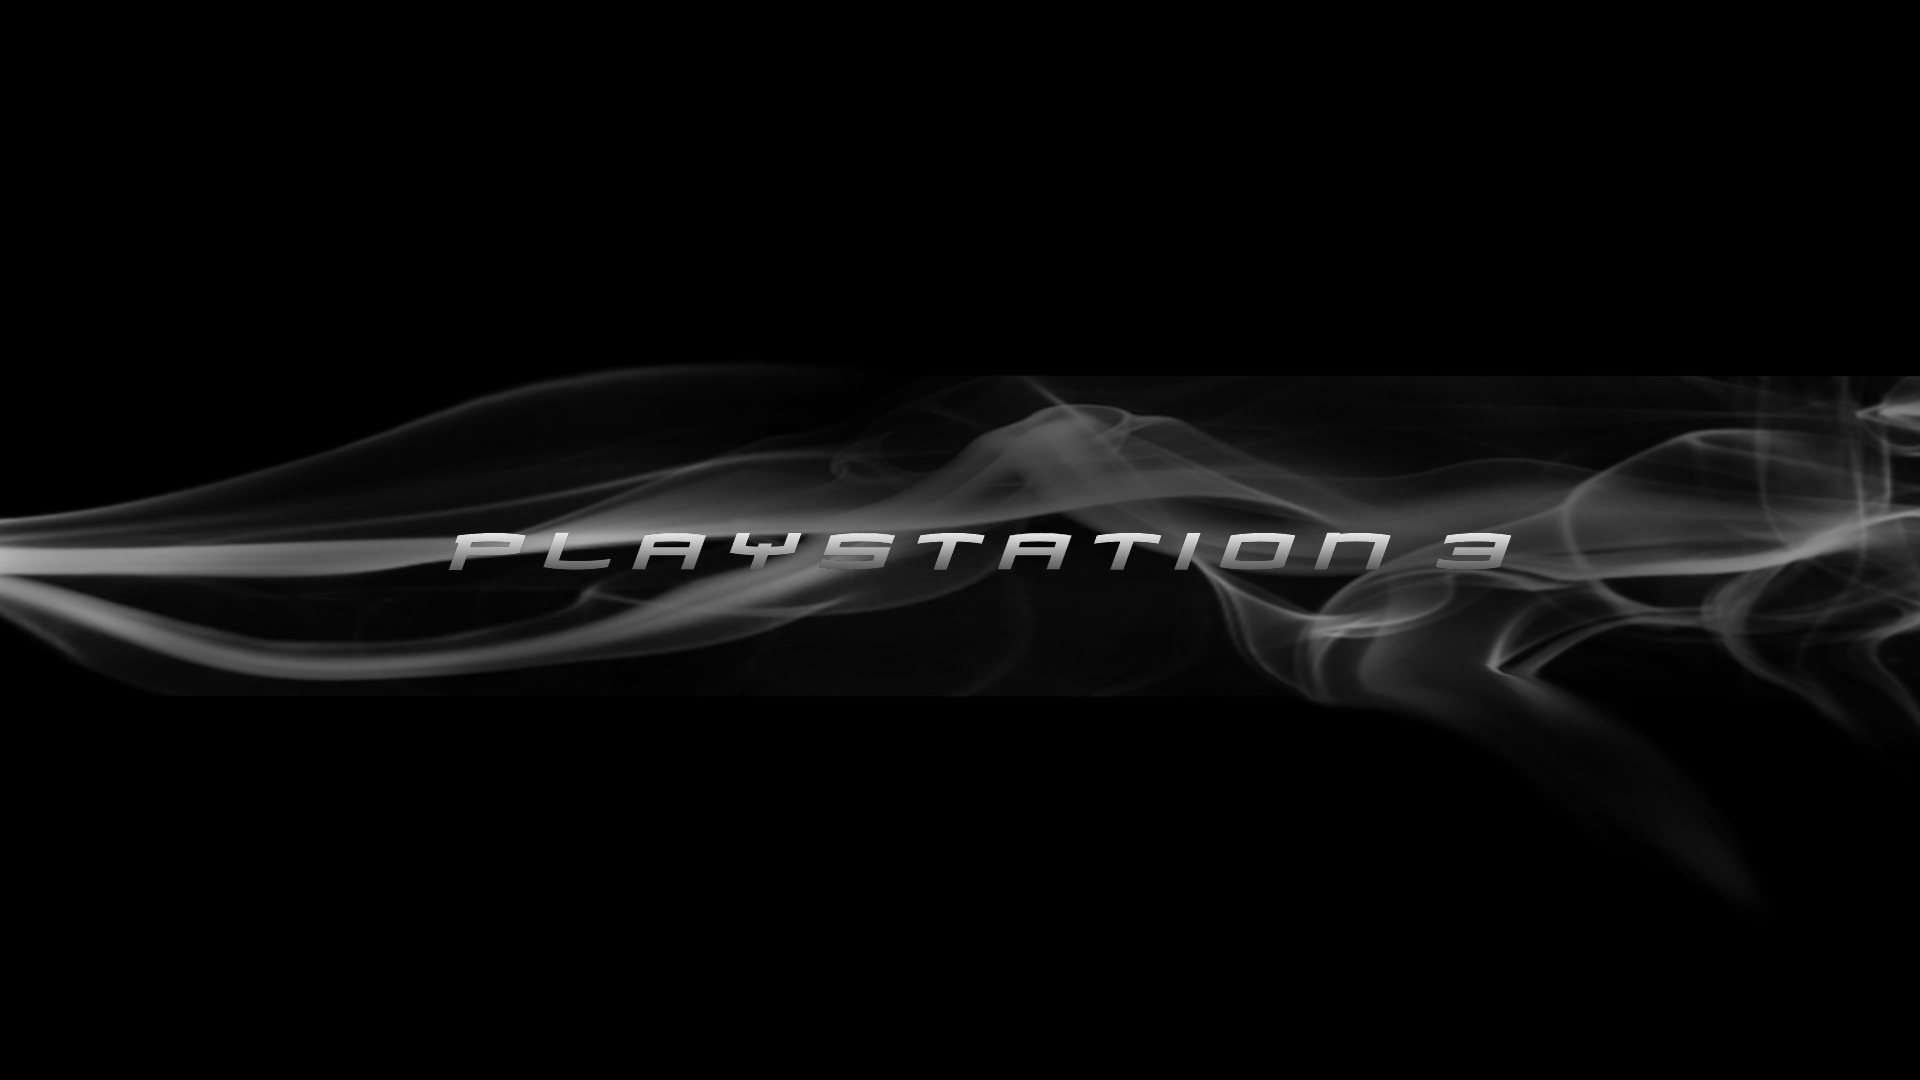 PlayStation 3 Smoke Logo Wallpaper